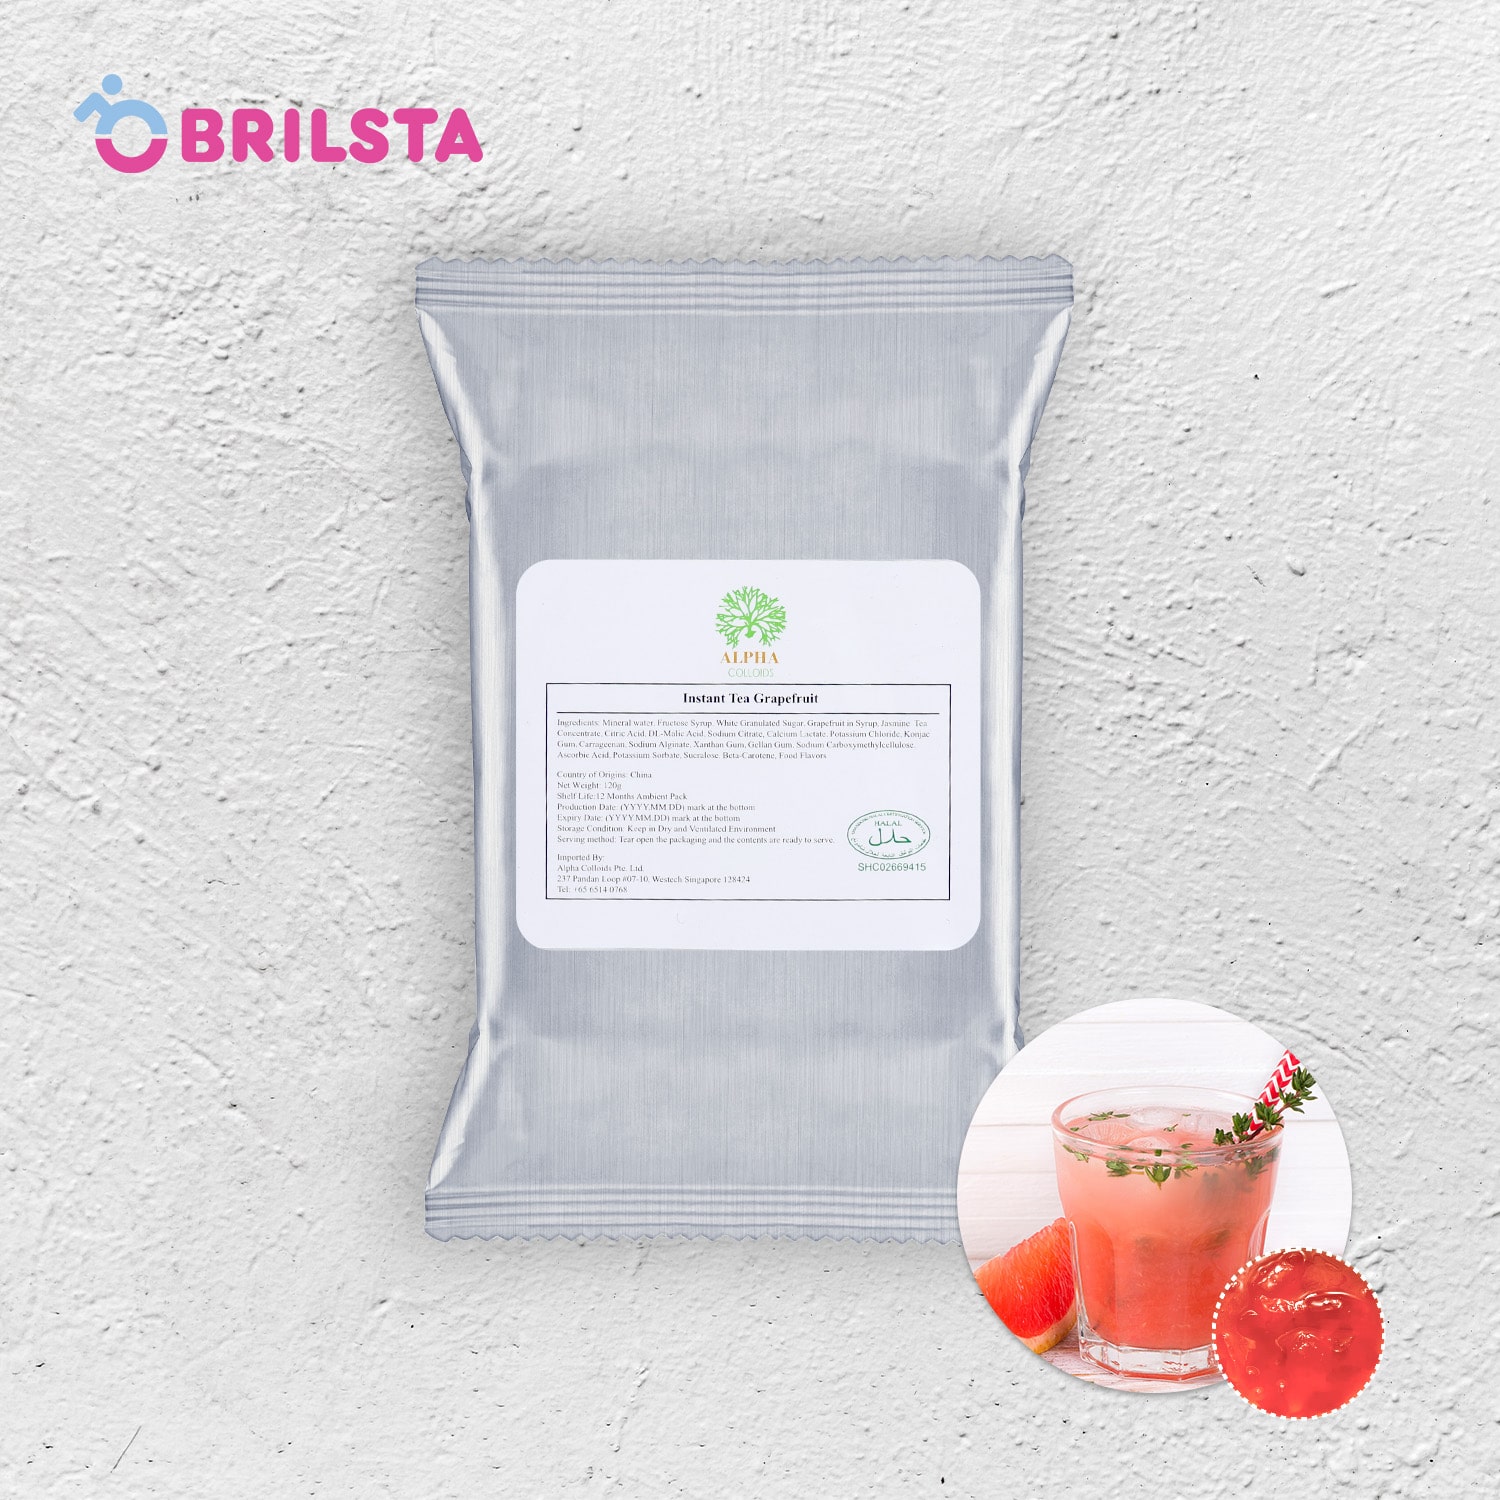 Brilsta - Instant Drink